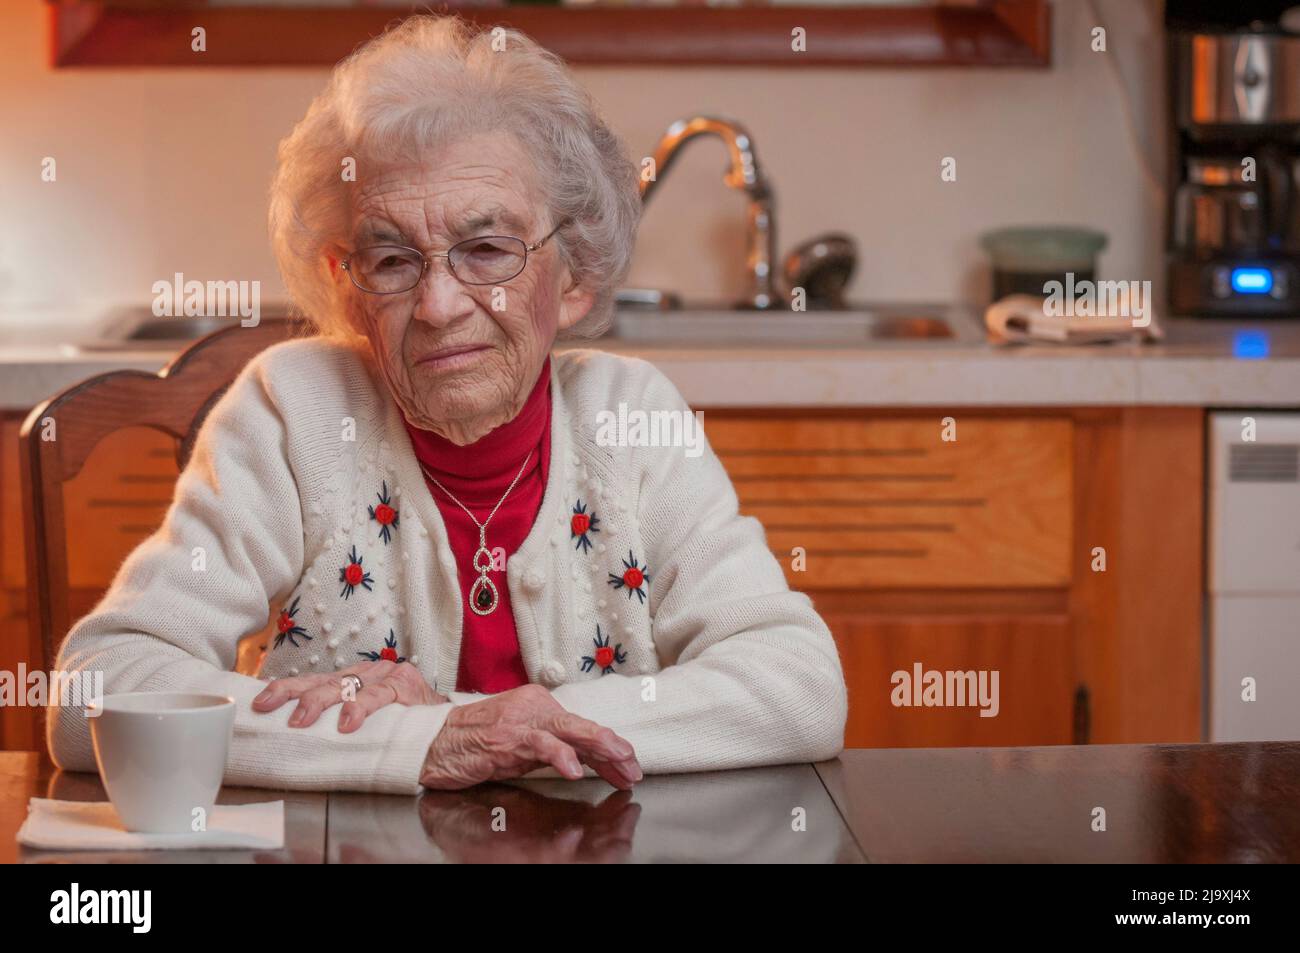 Elderly woman looking sad and depressed Stock Photo